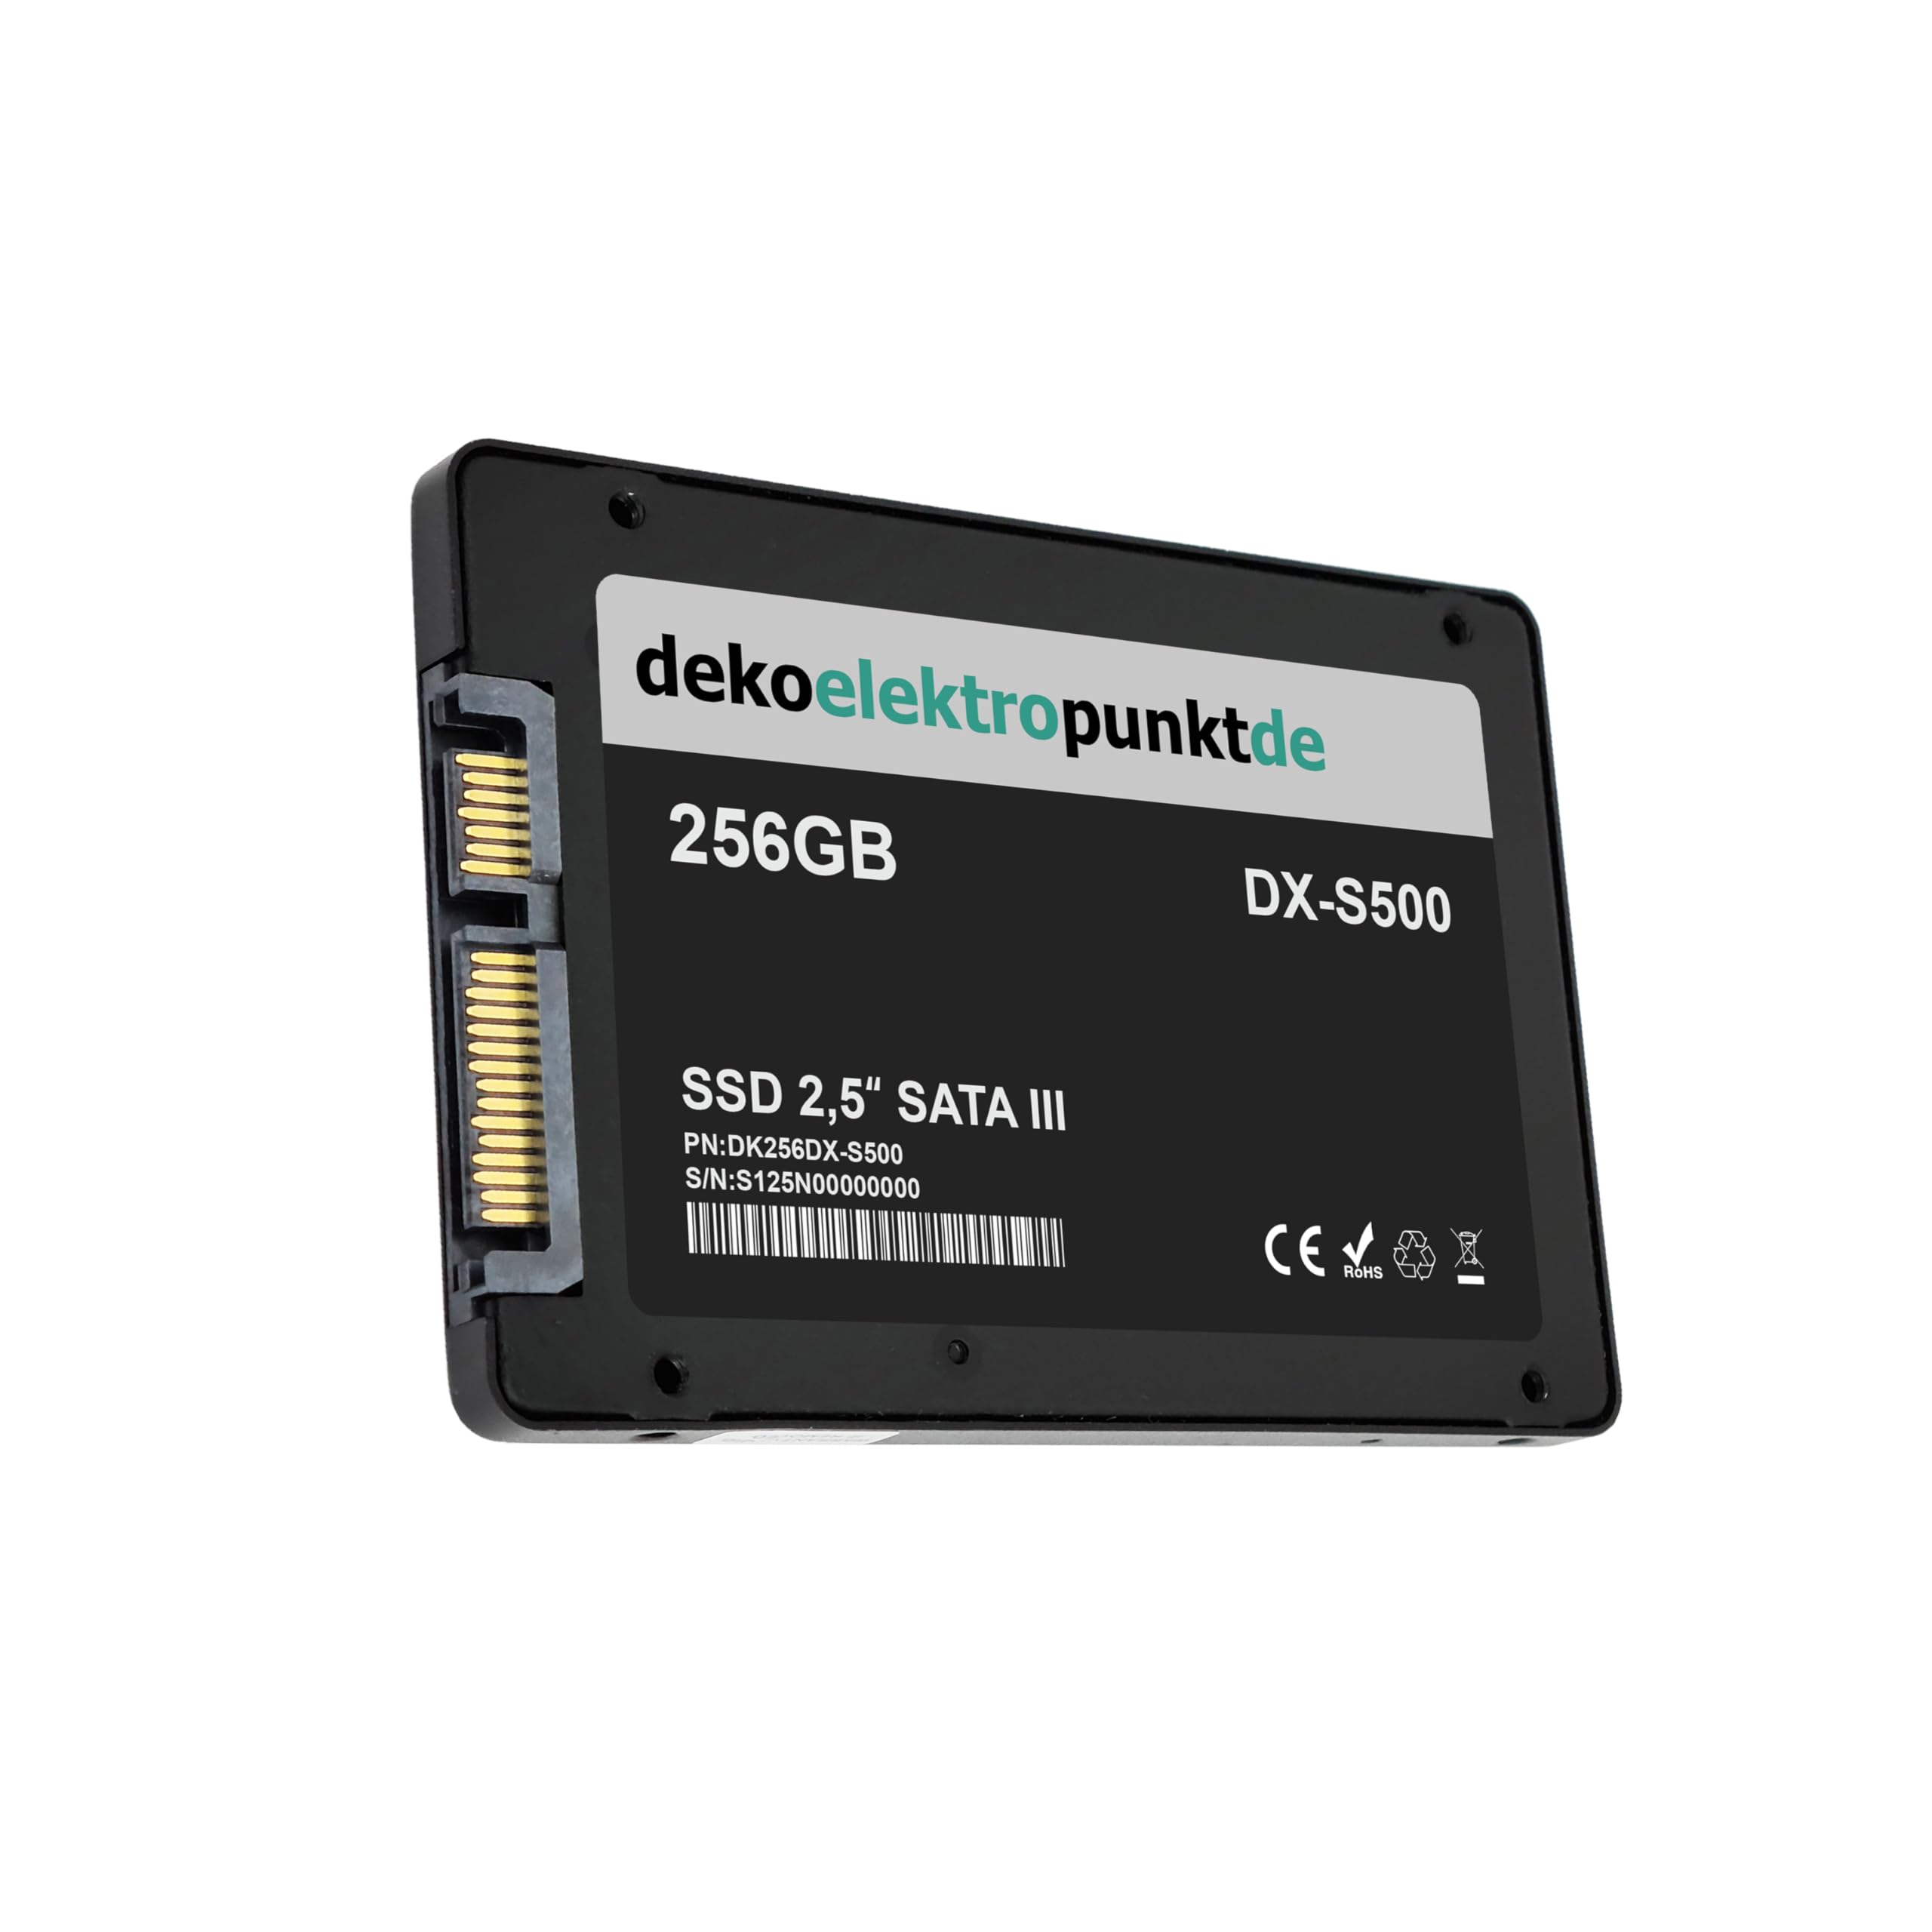 dekoelektropunktde 256GB SSD Festplatte kompatibel mit HP Pavilion 11-n070 g7-2345 17-f003nf 17-g101nl dv6-1110